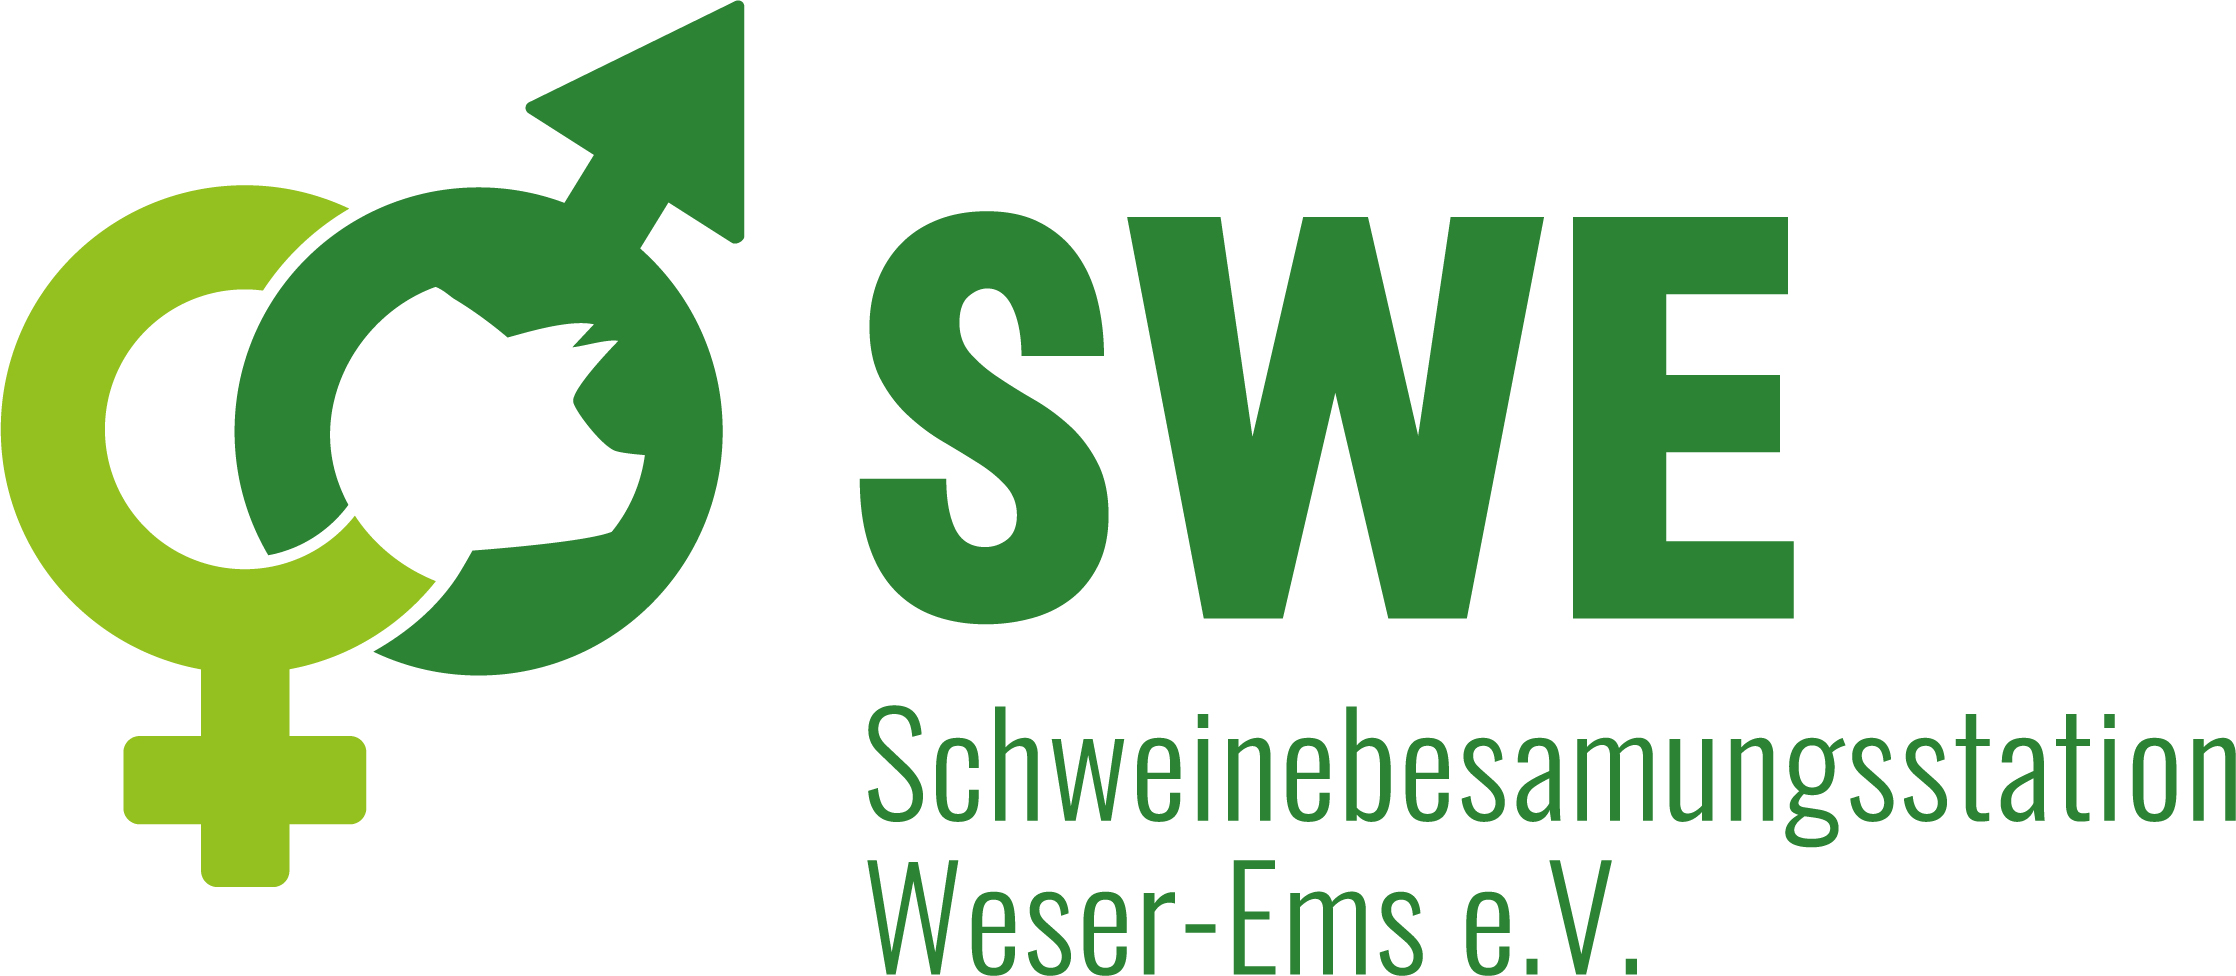 Schweinebesamungsstation Weser-Ems e.V.